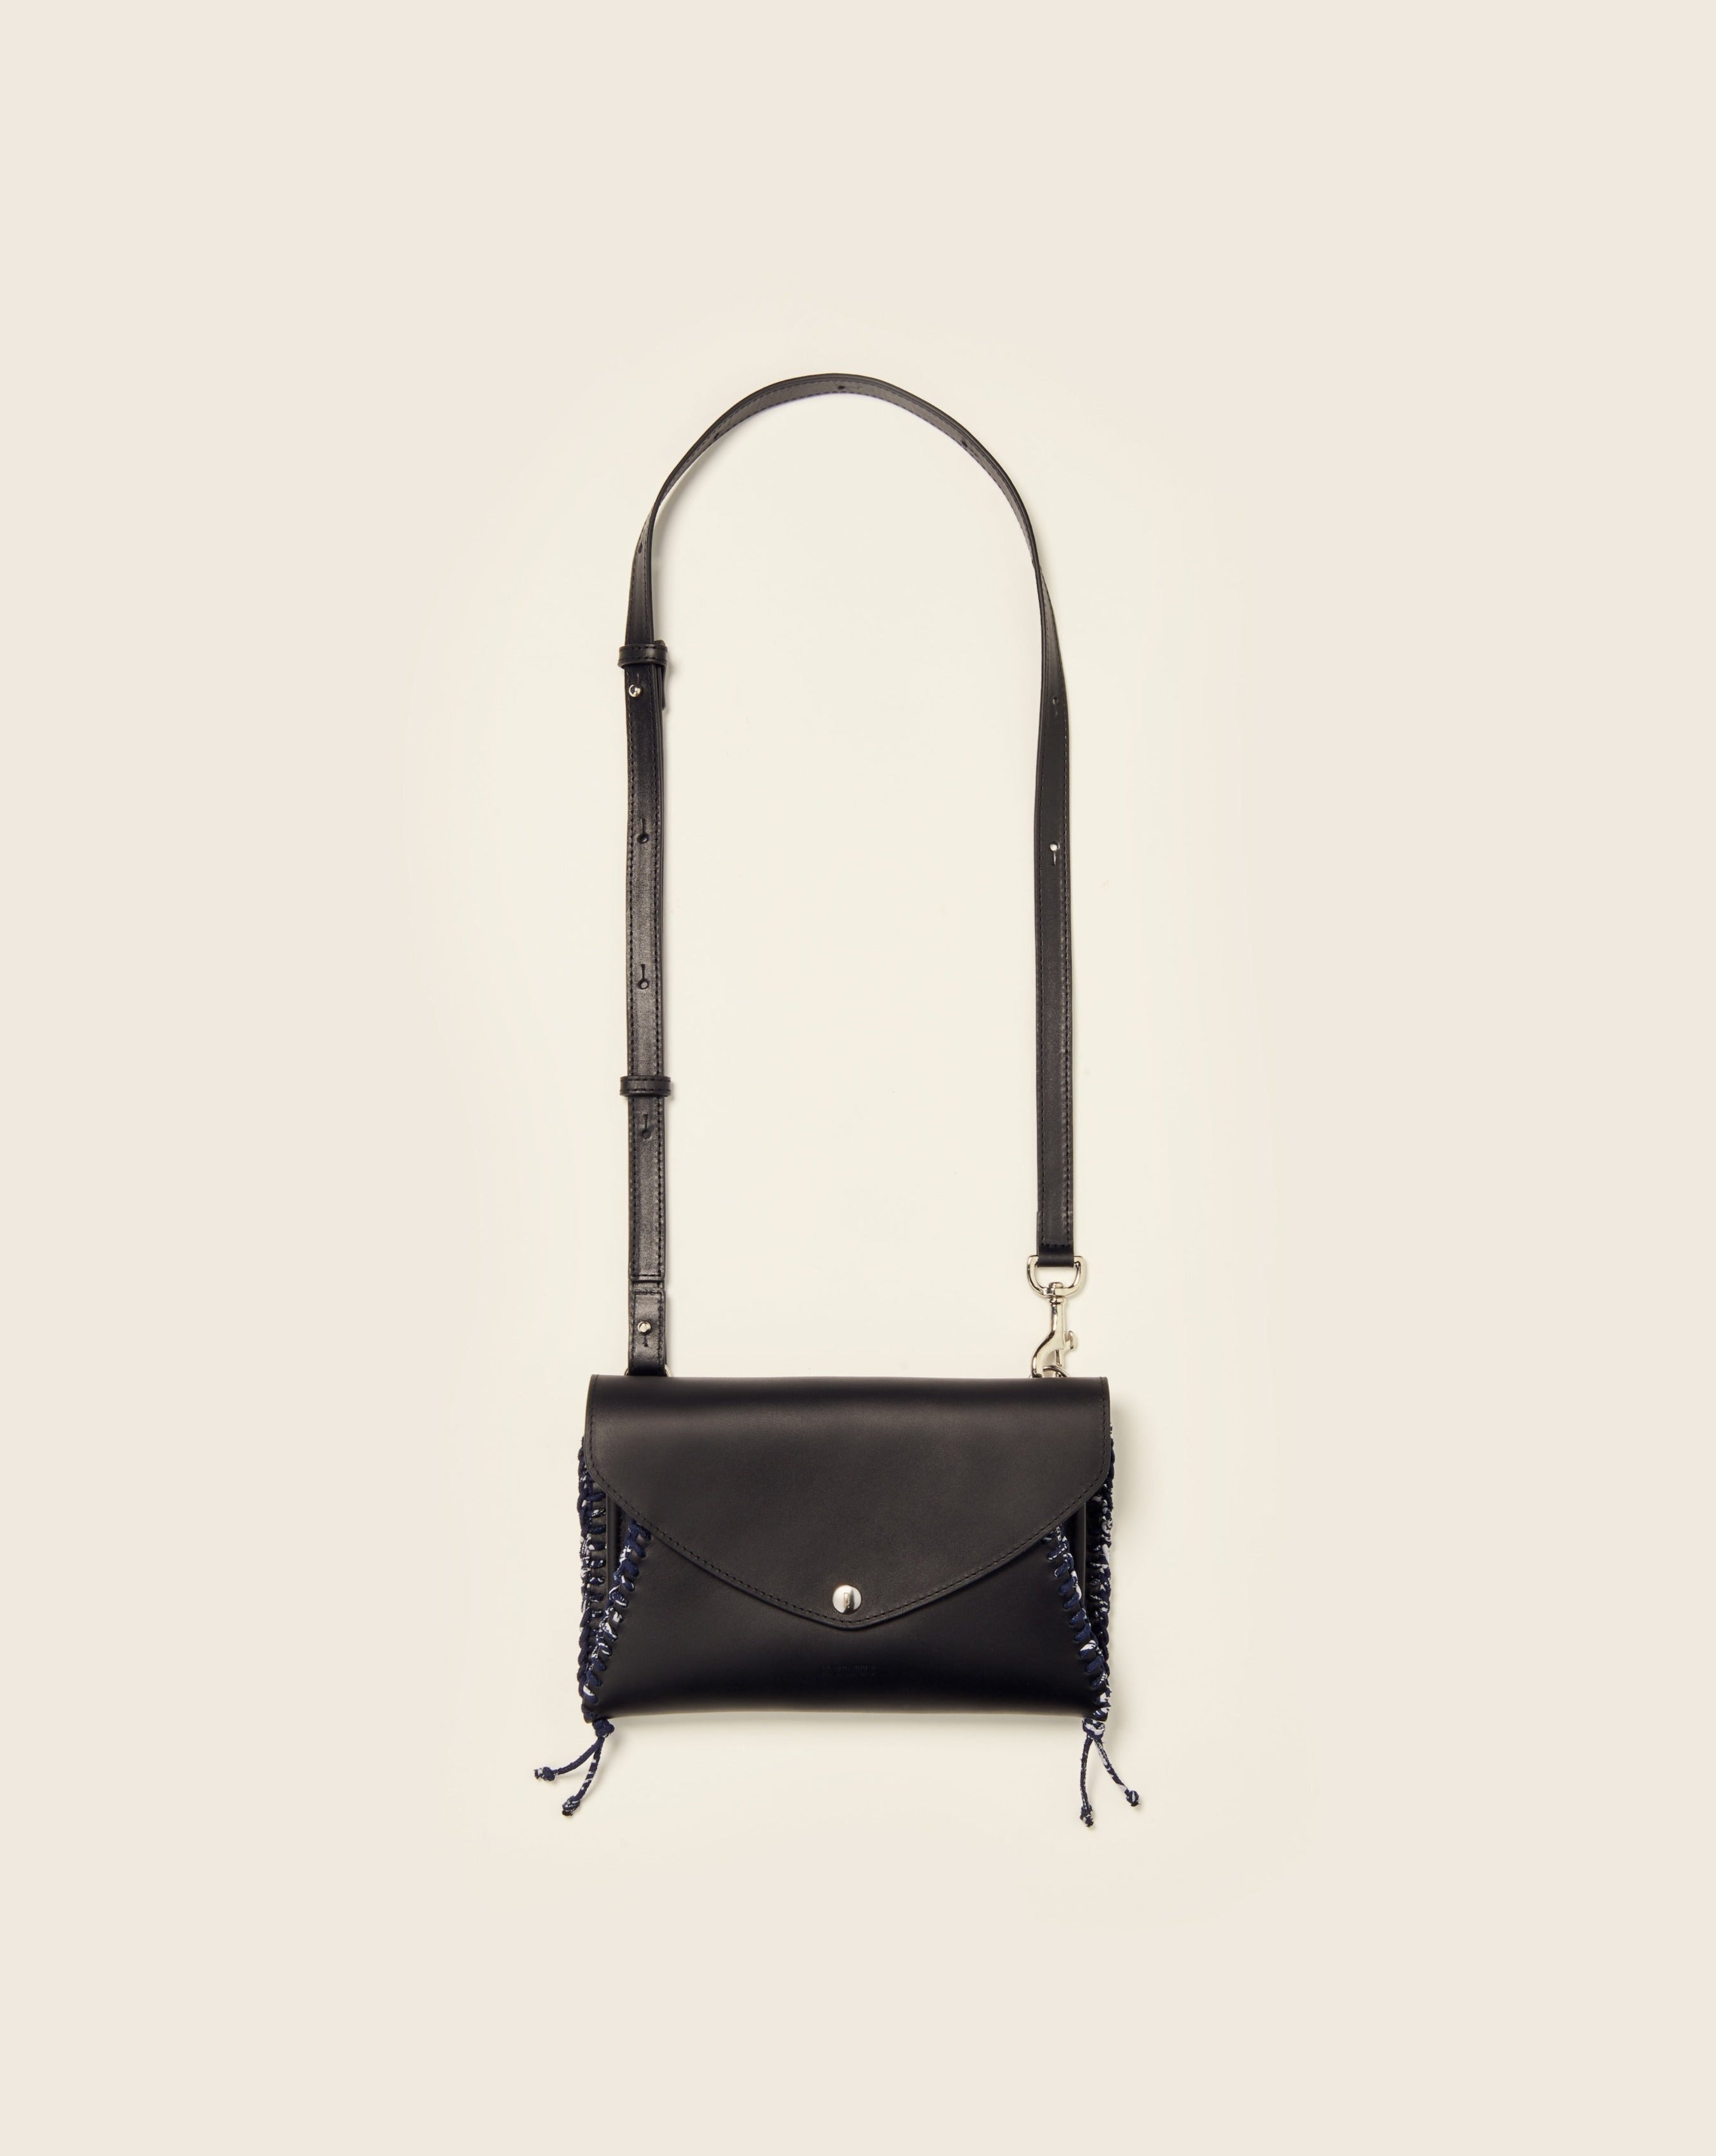 BATU - Envelope bag - Black leather & Bandana navy